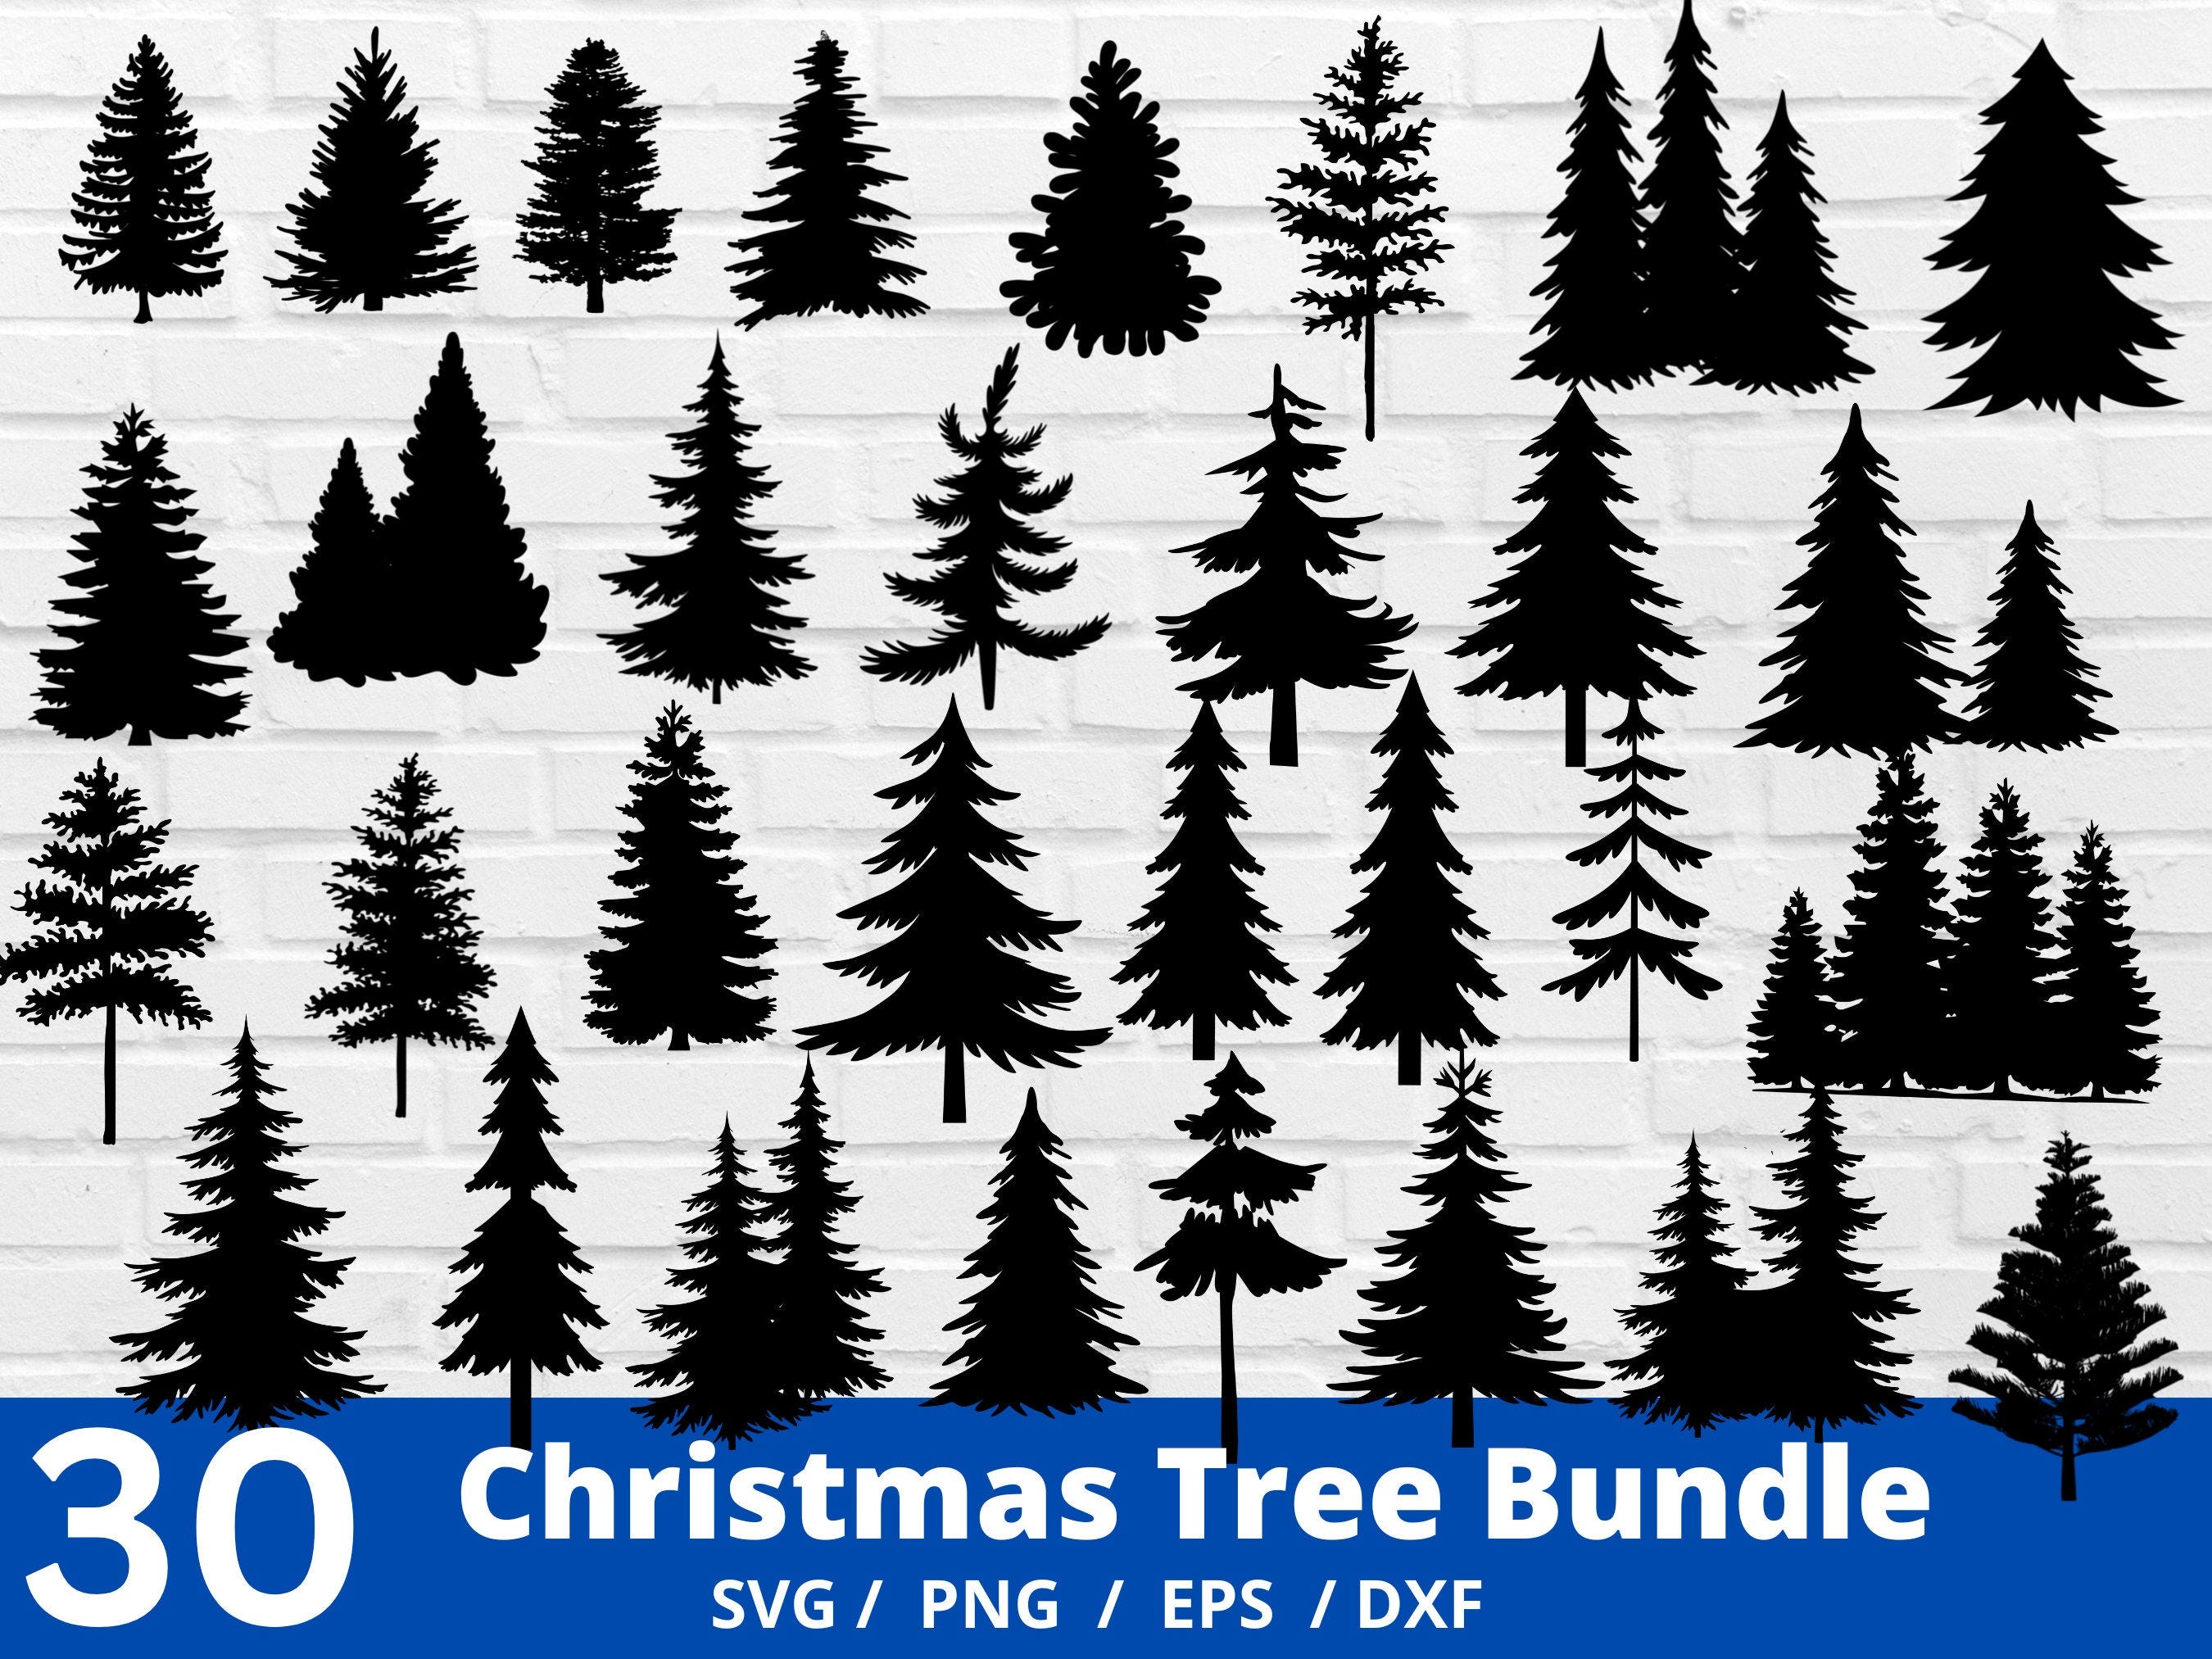 Christmas Tree Svg, Christmas SVG, Tree Christmas Svg, Christmas Cut File, Christmas tree clipart, Christmas Tree bundle Svg